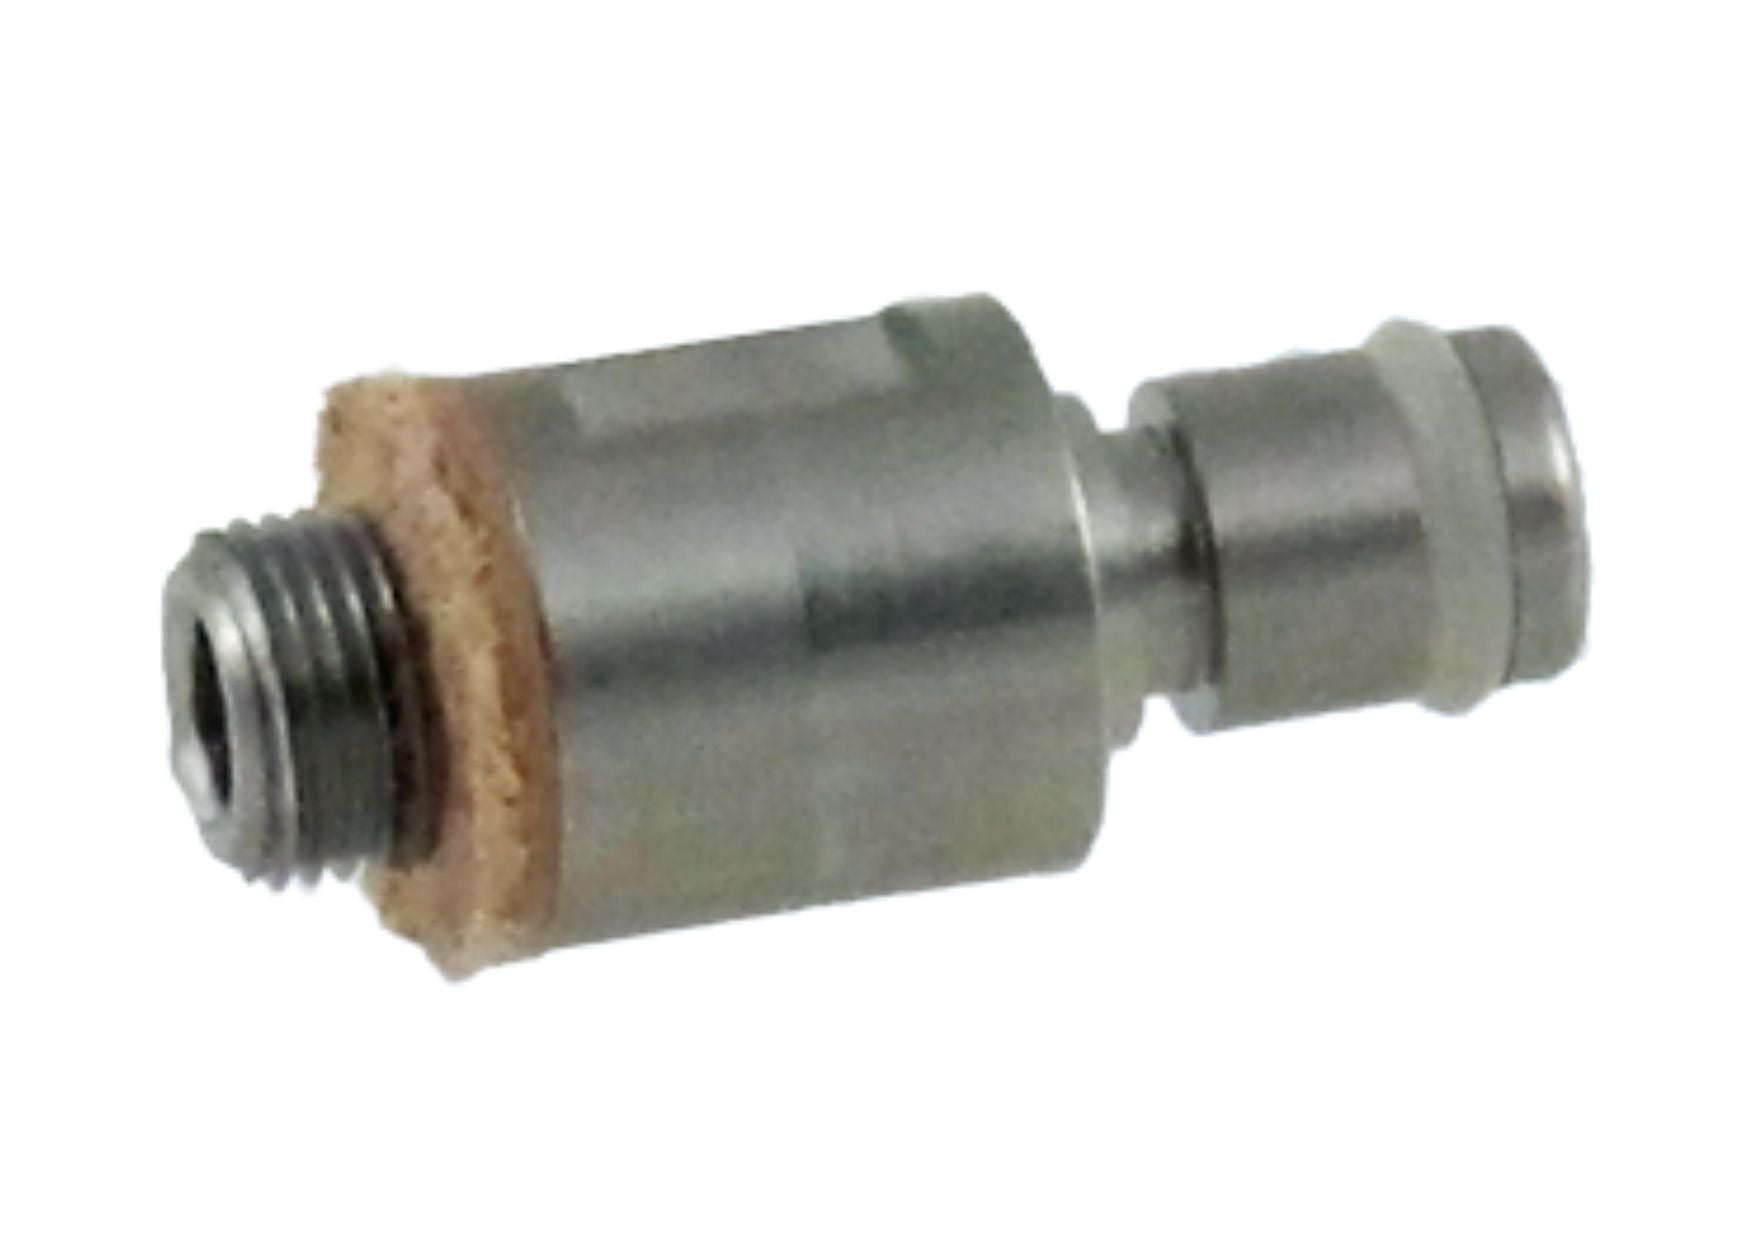 QC adapter, 5/16-36 thread-M, male